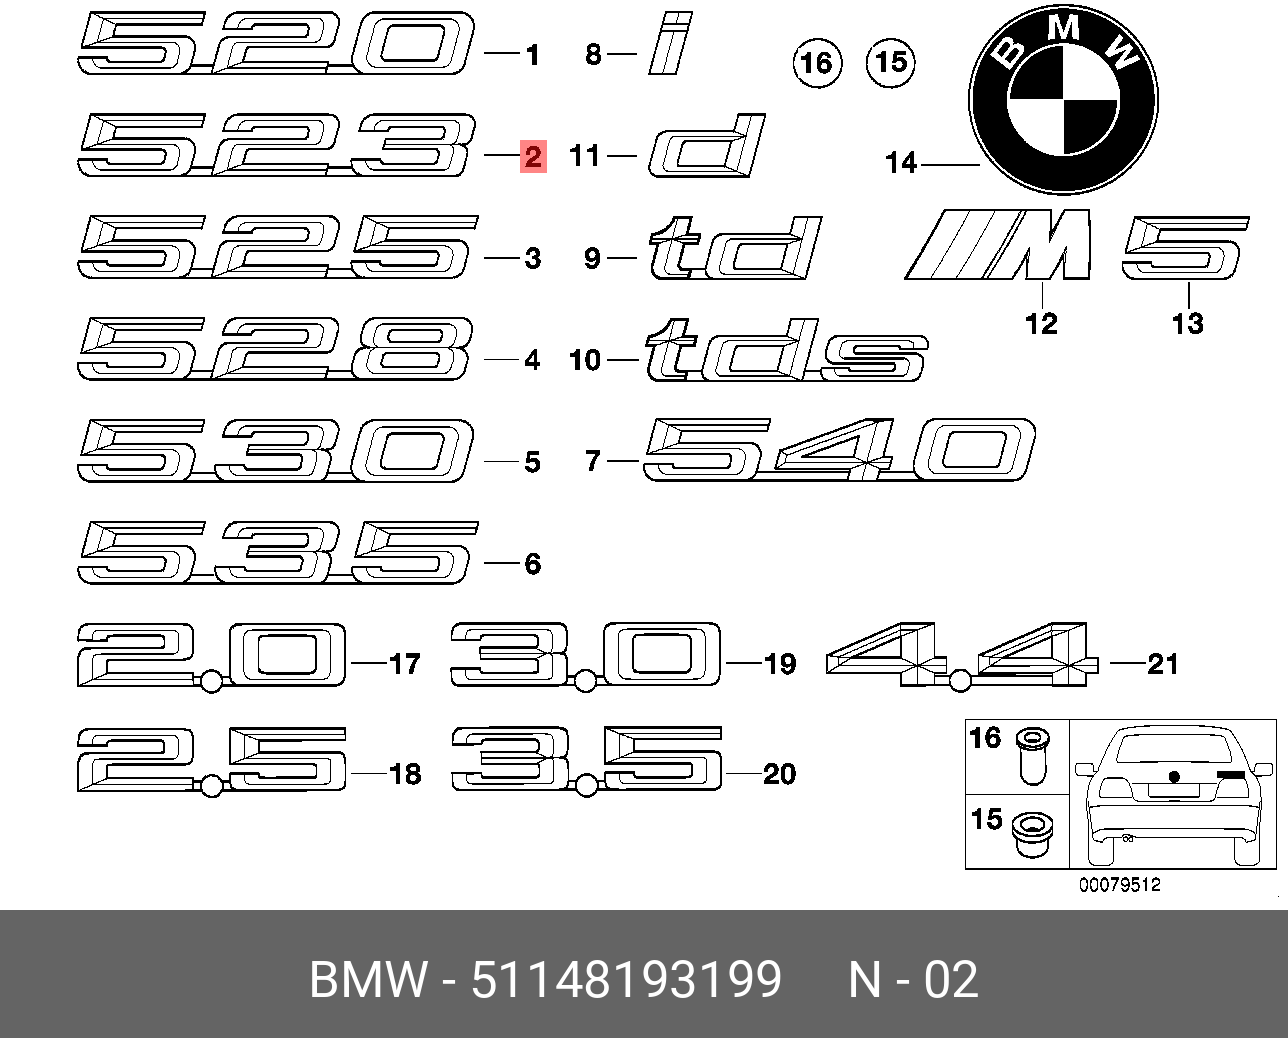 Genuine BMW E39 Sedan Trunk Lid 523 Emblem Badge Logo OEM 51148193199